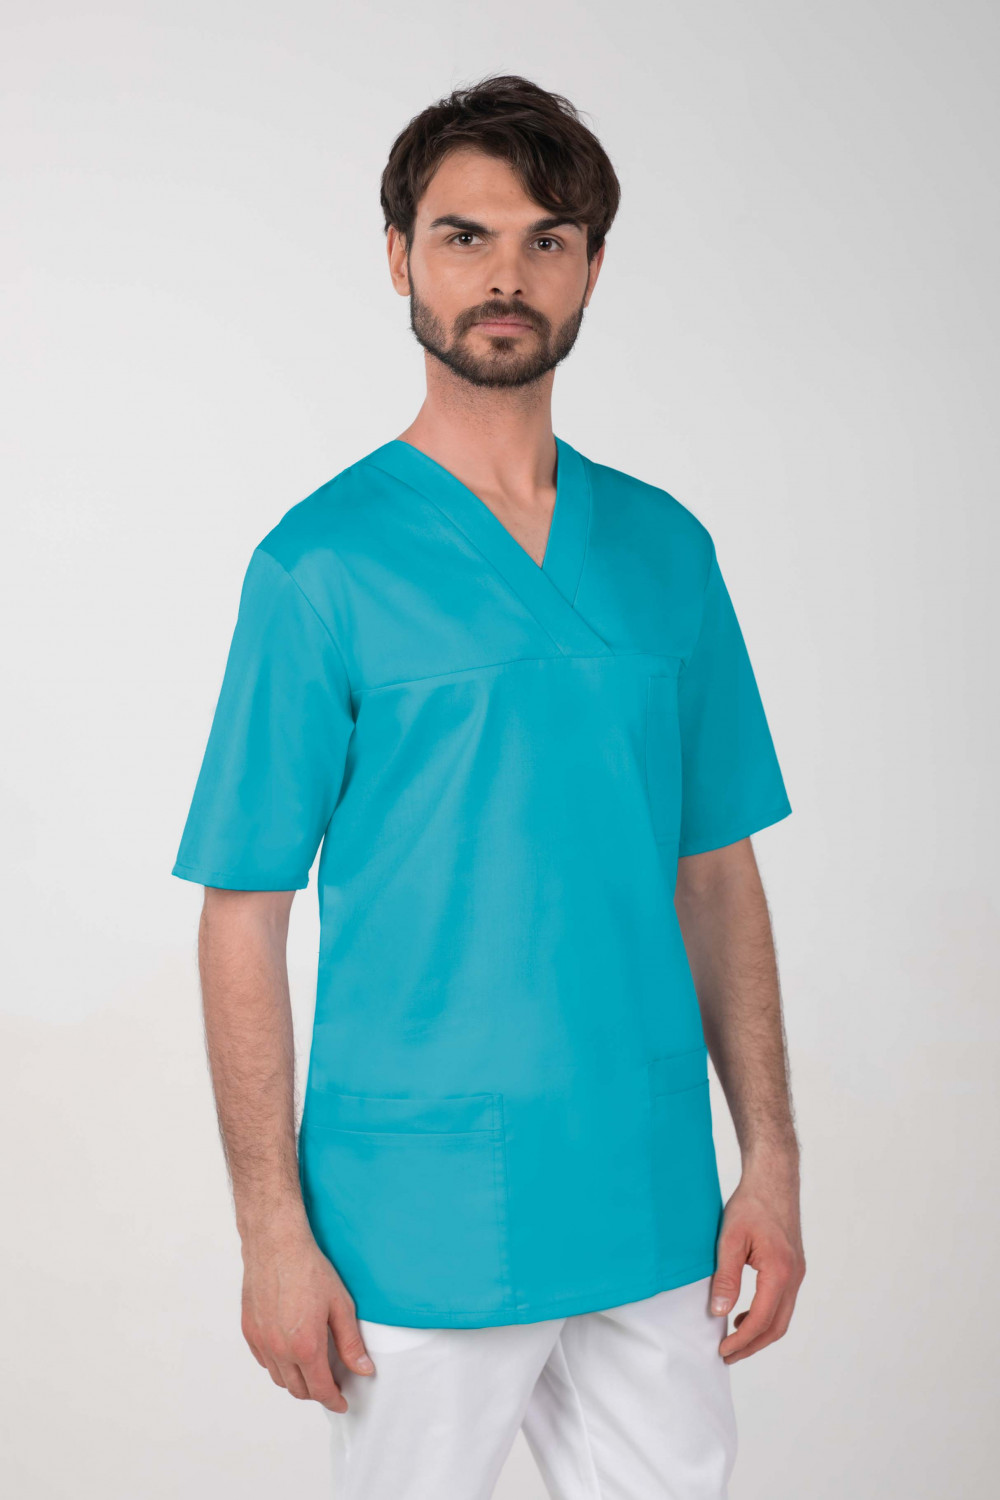 M-074C Bluza medyczna chirurgiczna męska turkus